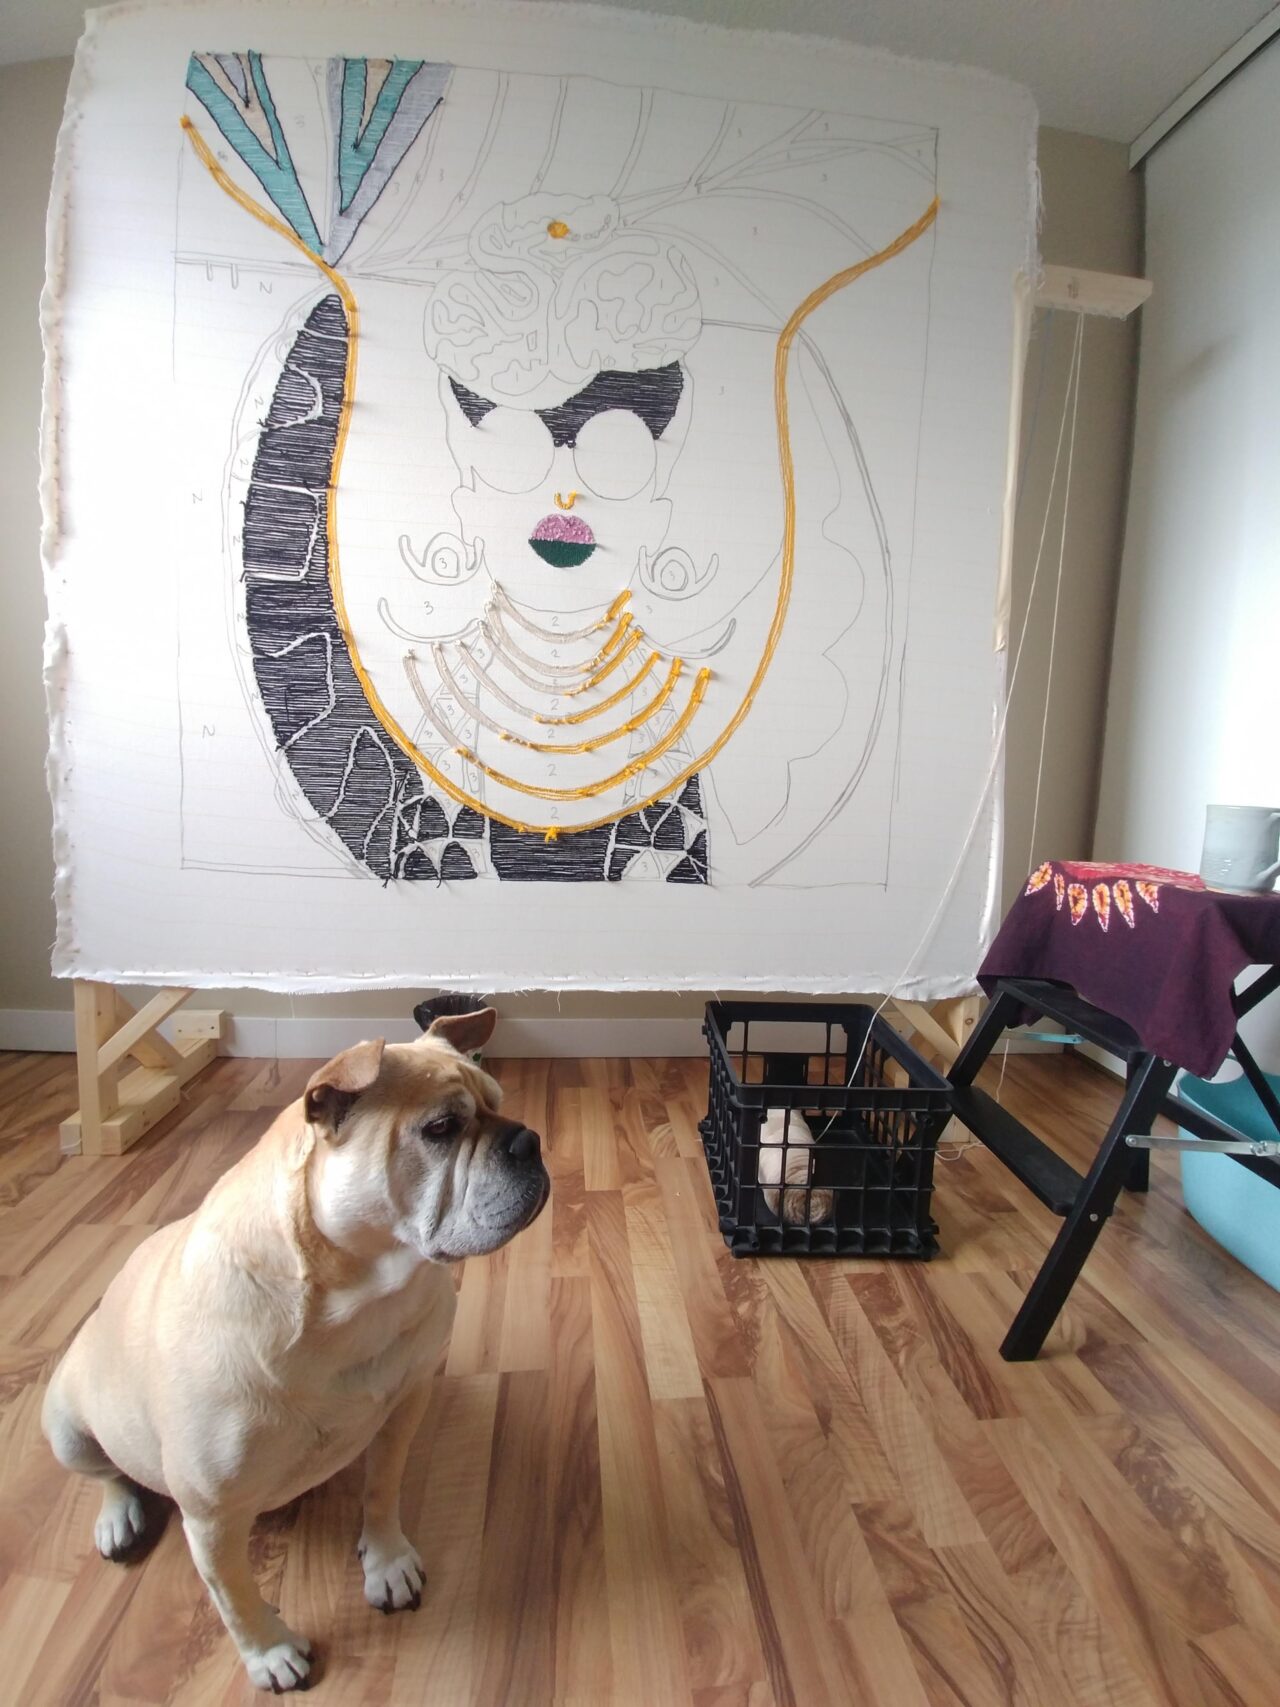 work in progress rug featuring dog